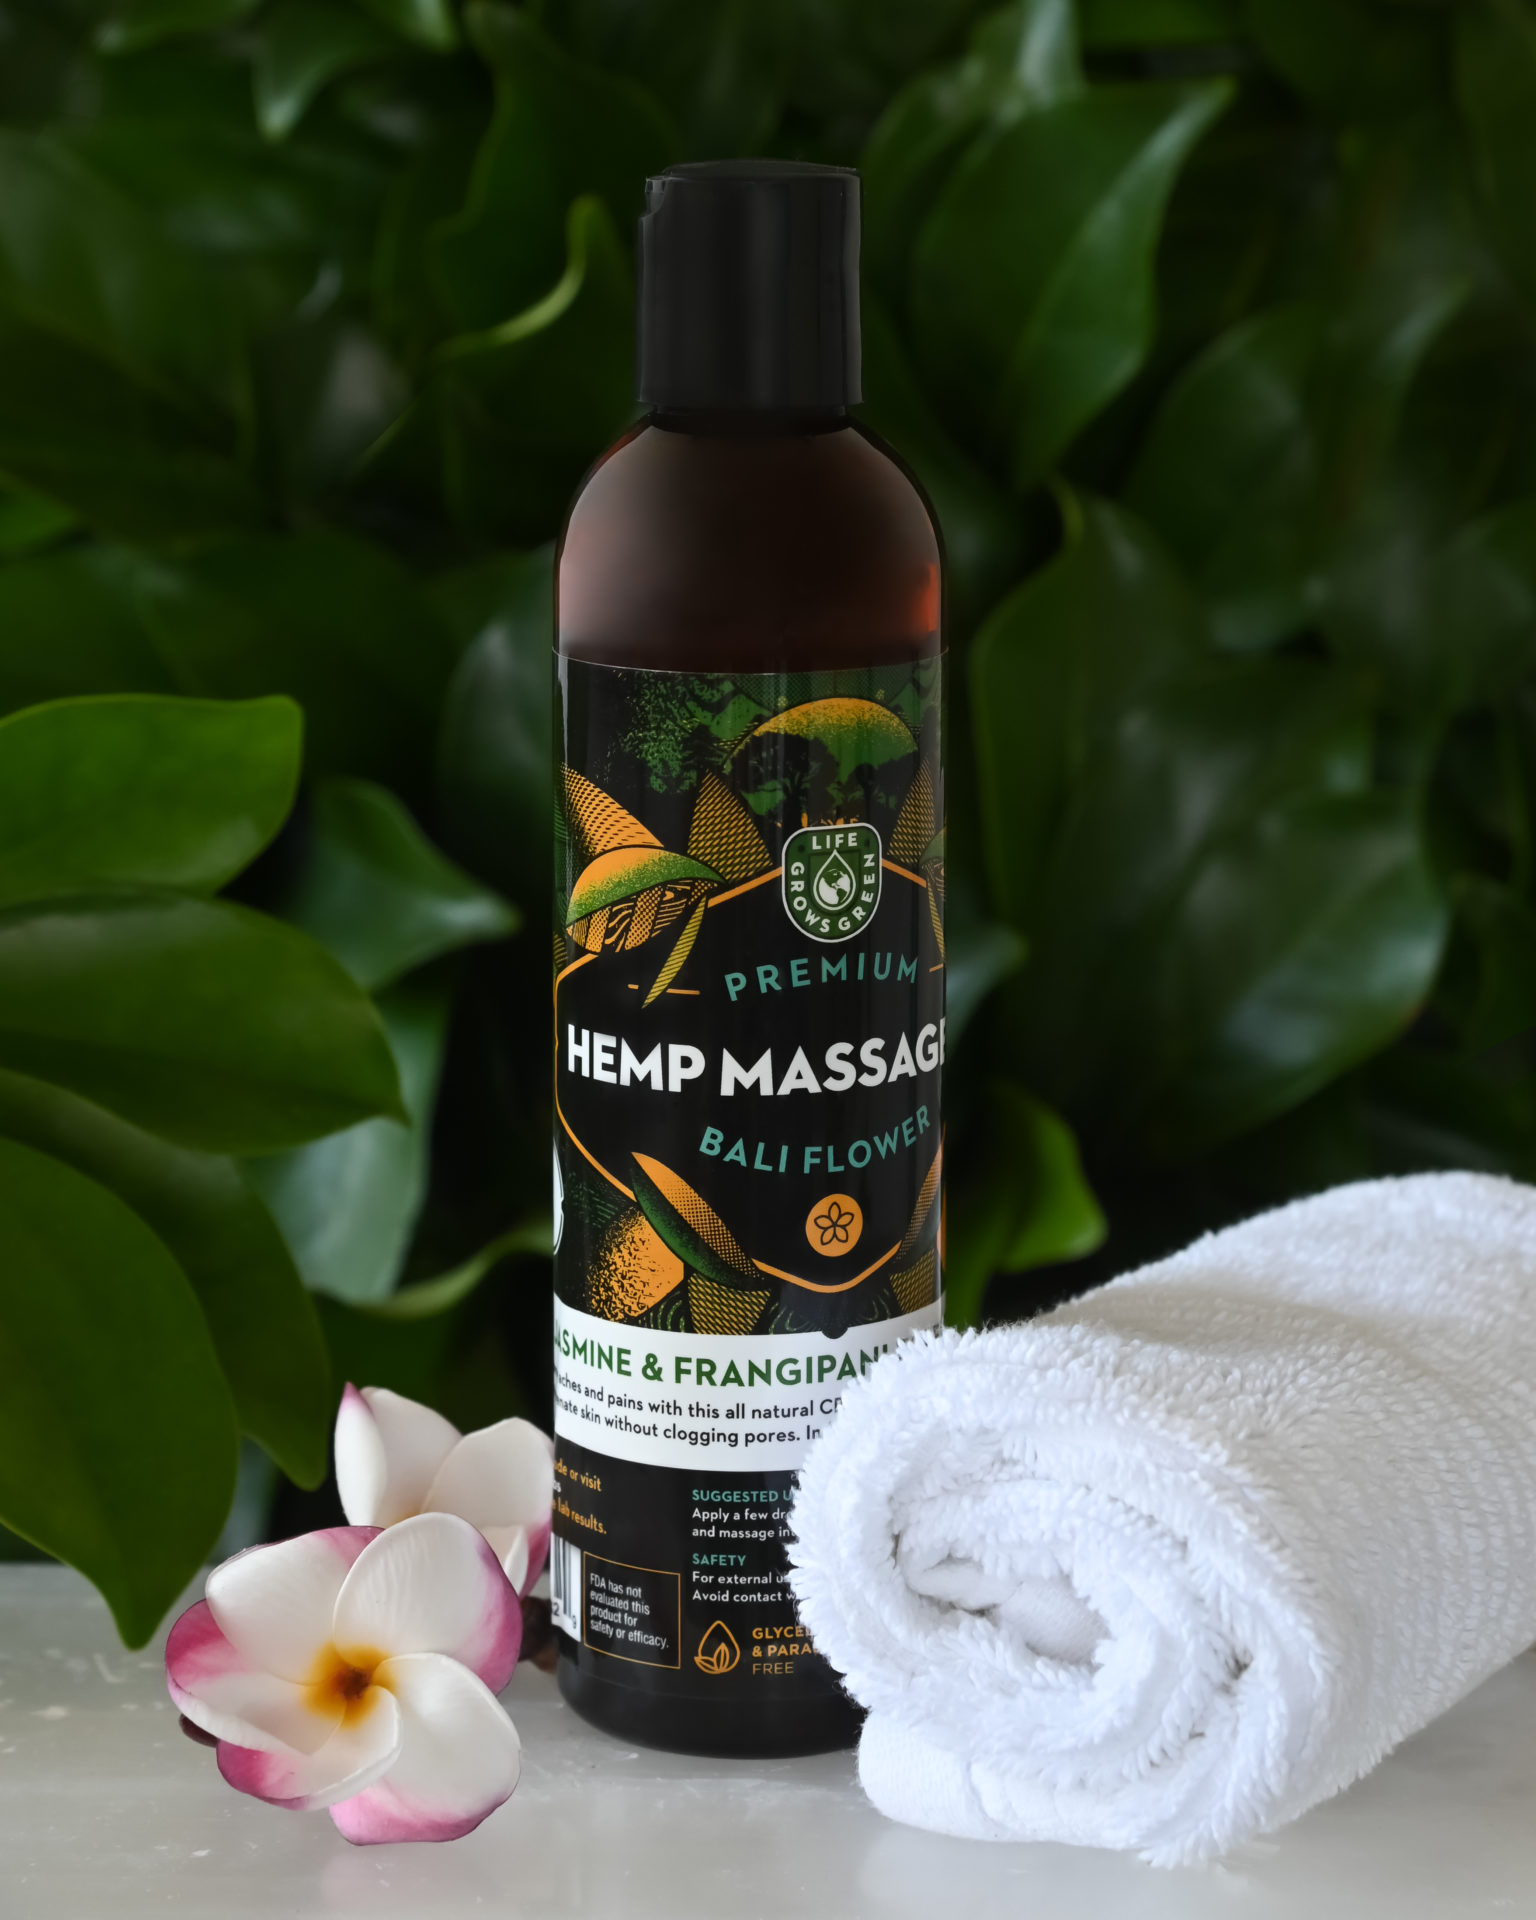 A bottle of hemp massage oil with a bali flower.